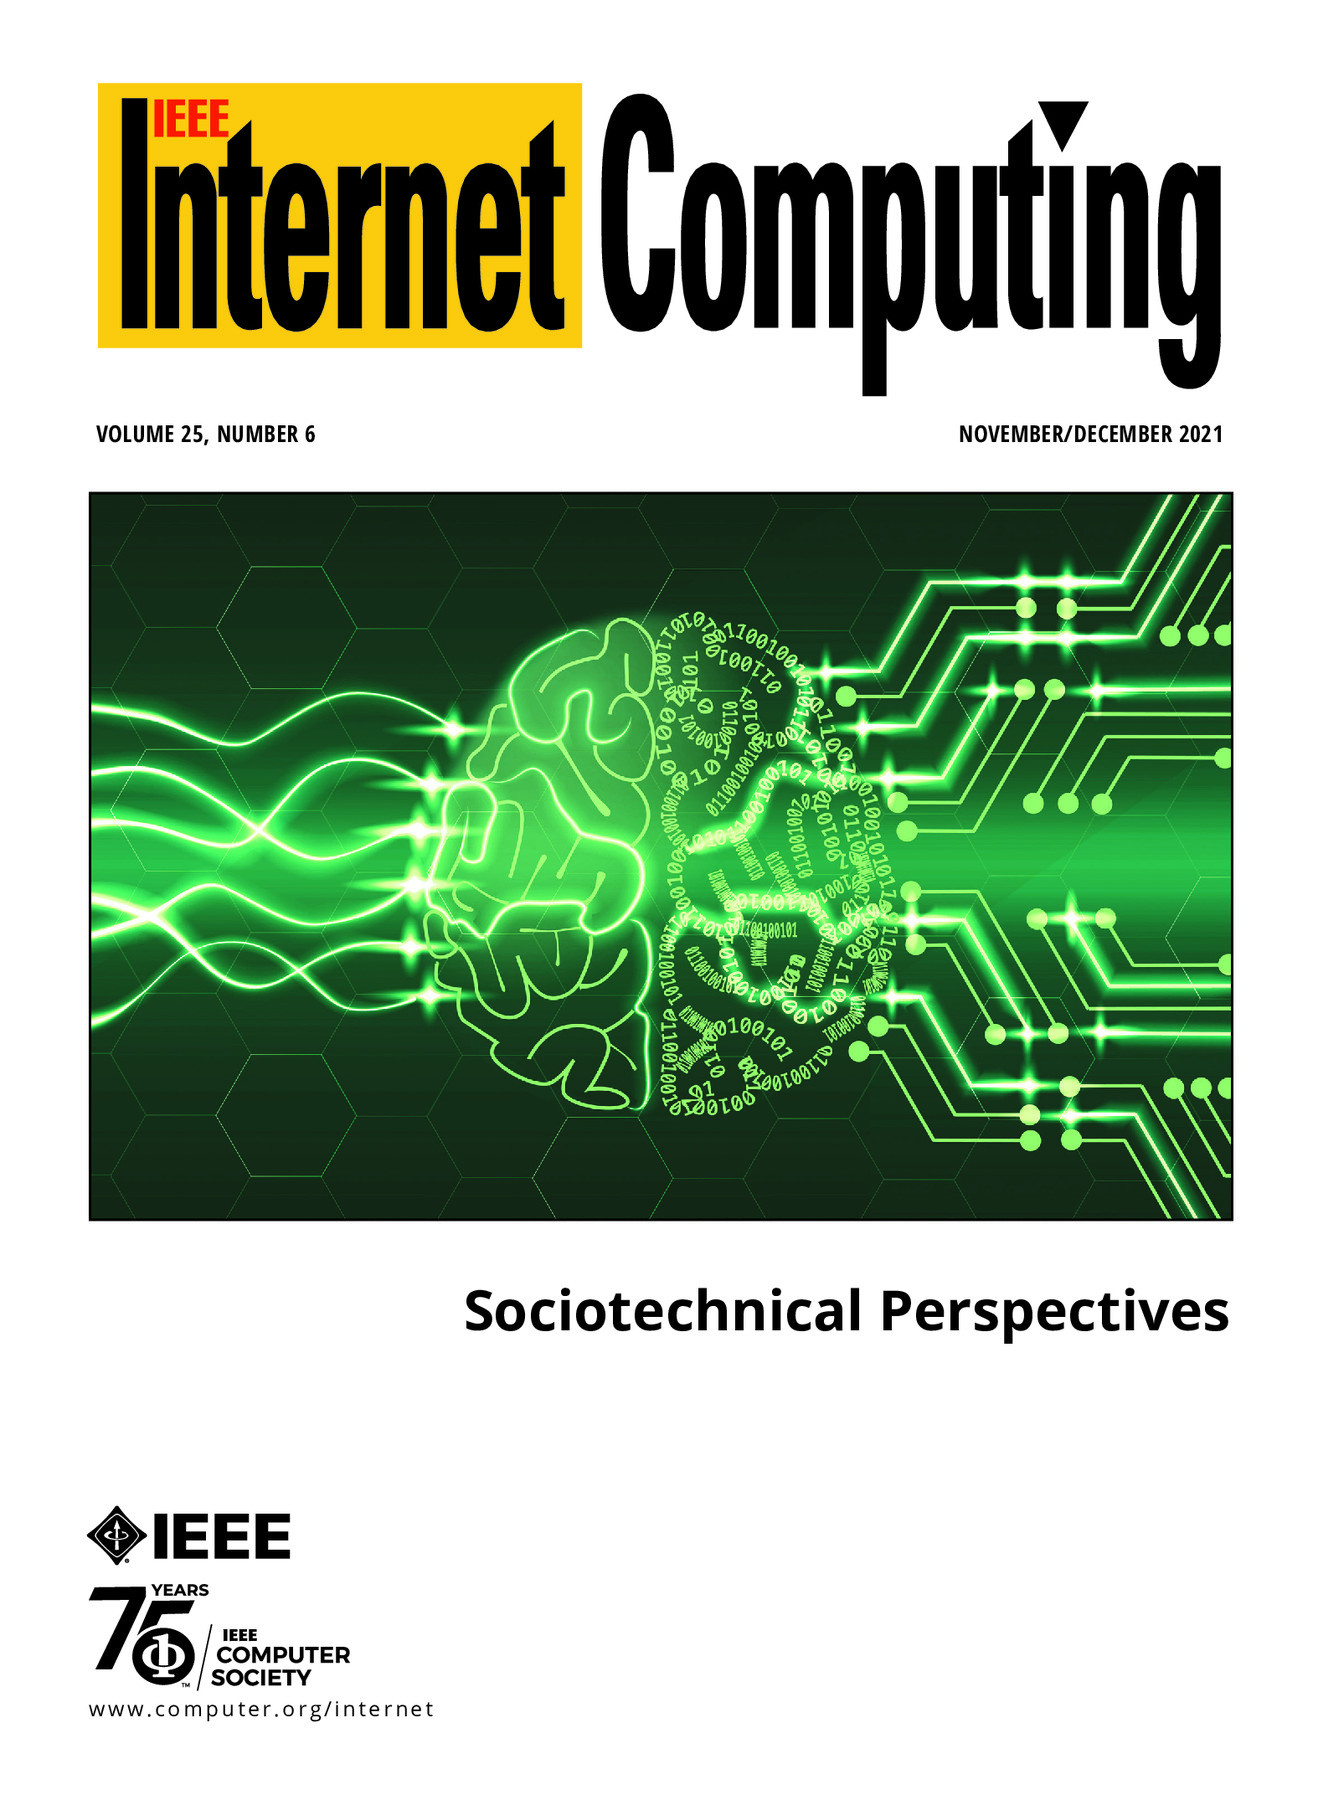 IEEE Internet Computing November/December 2021 Vol. 25 No. 6